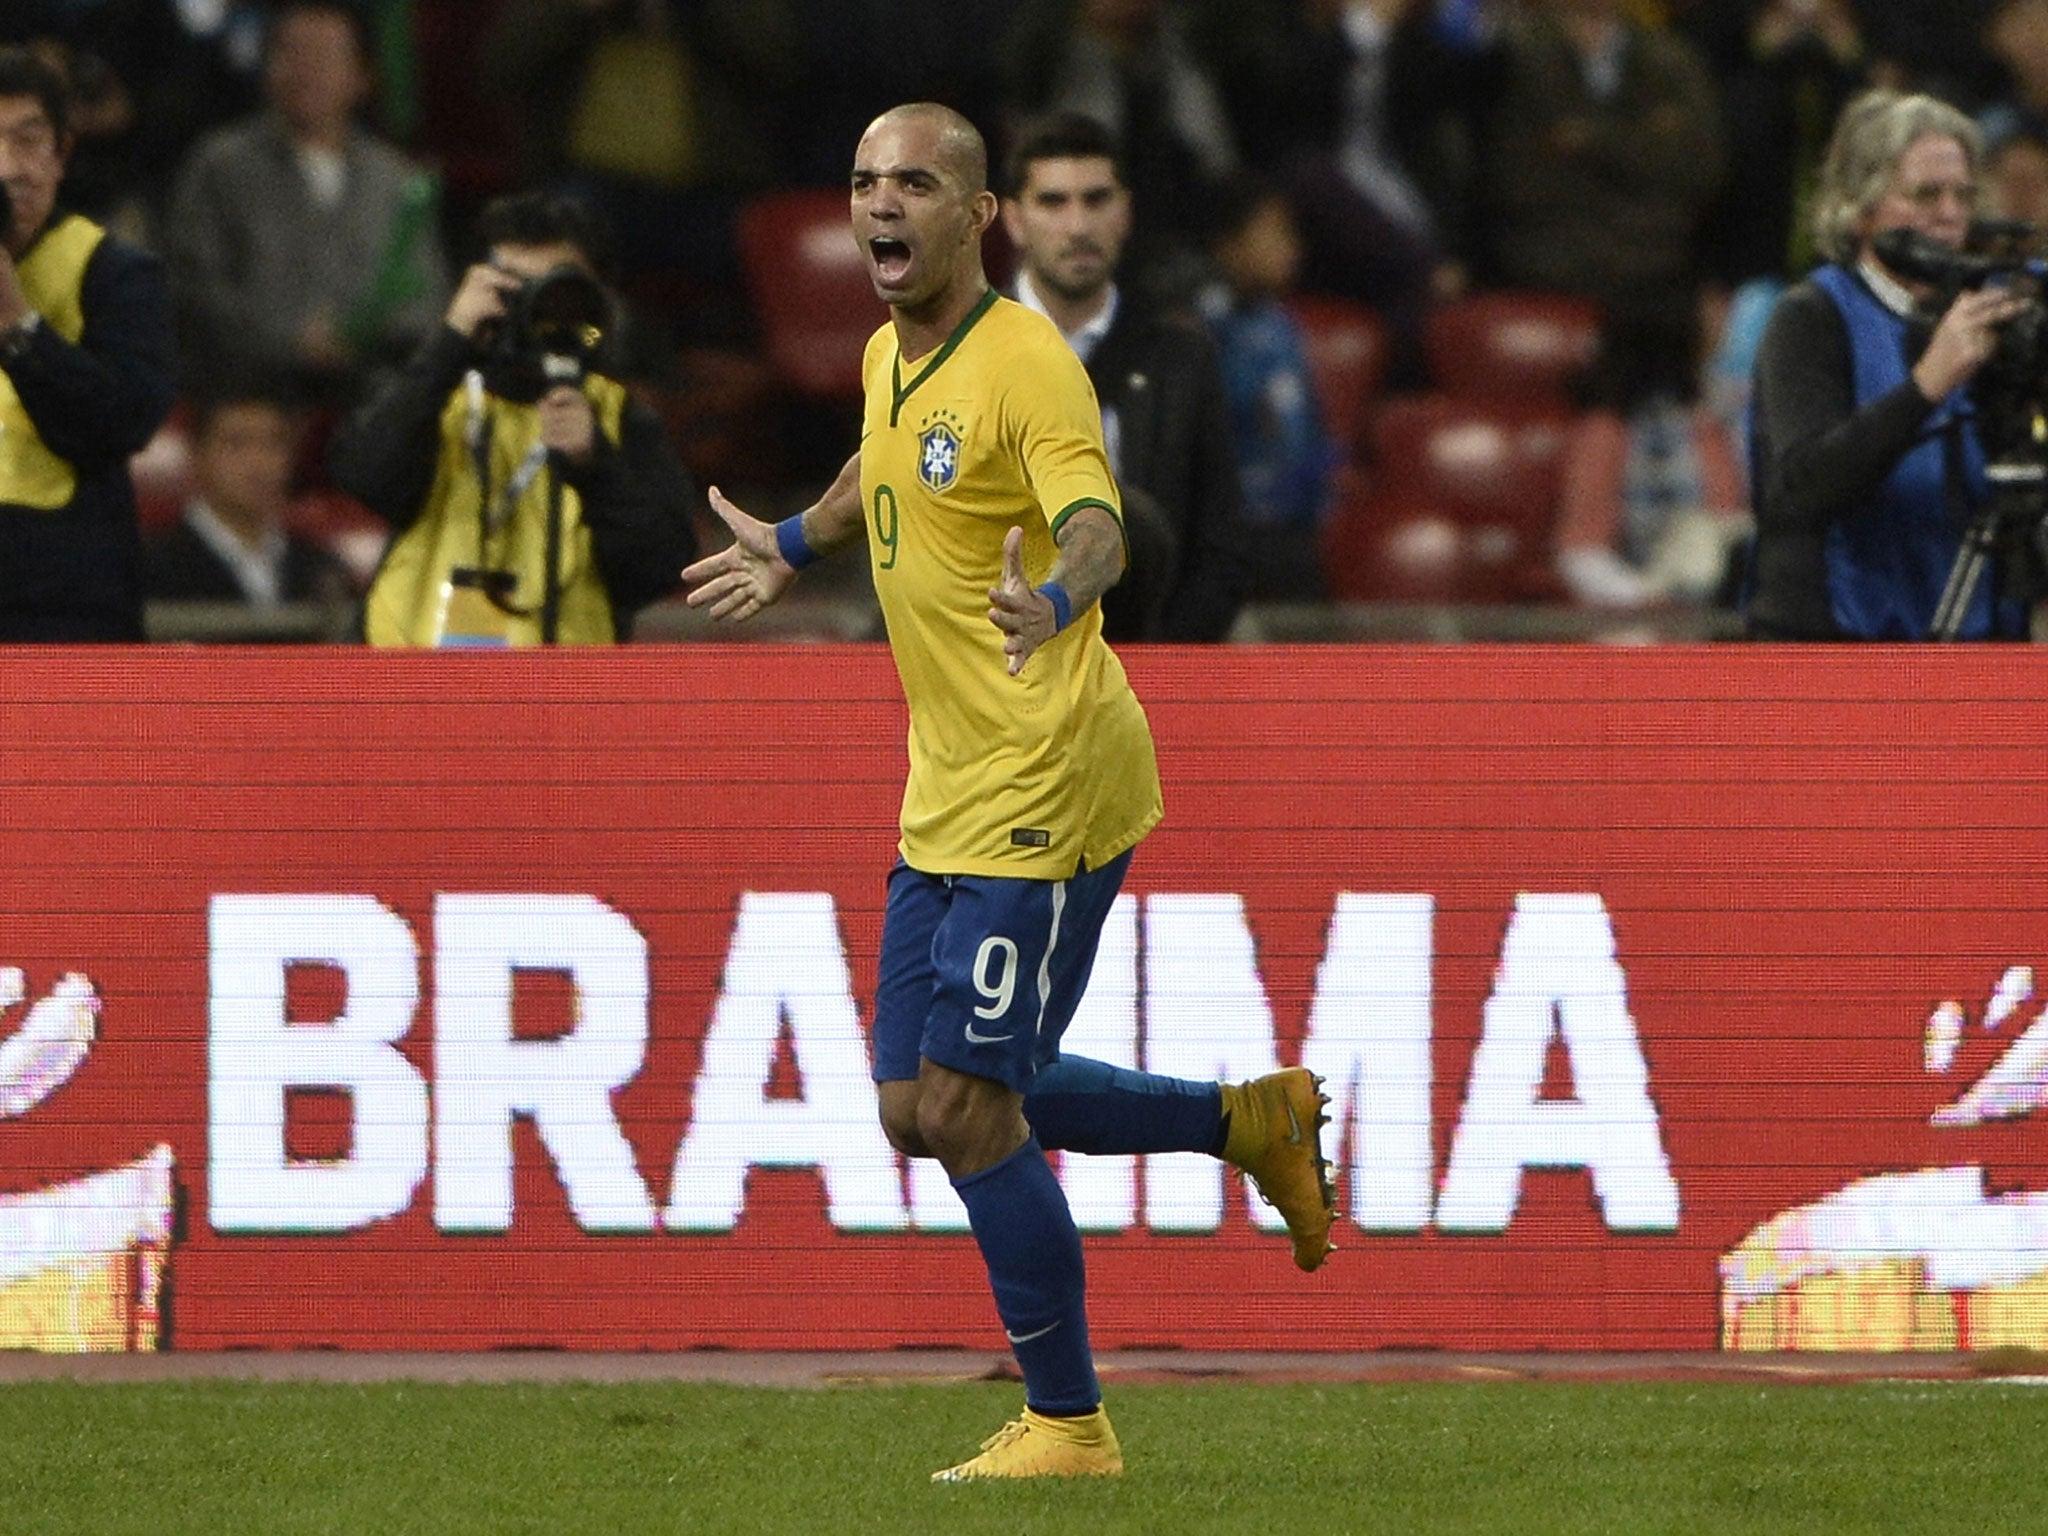 Brazil vs Argentina match report: Diego Tardelli brace secures